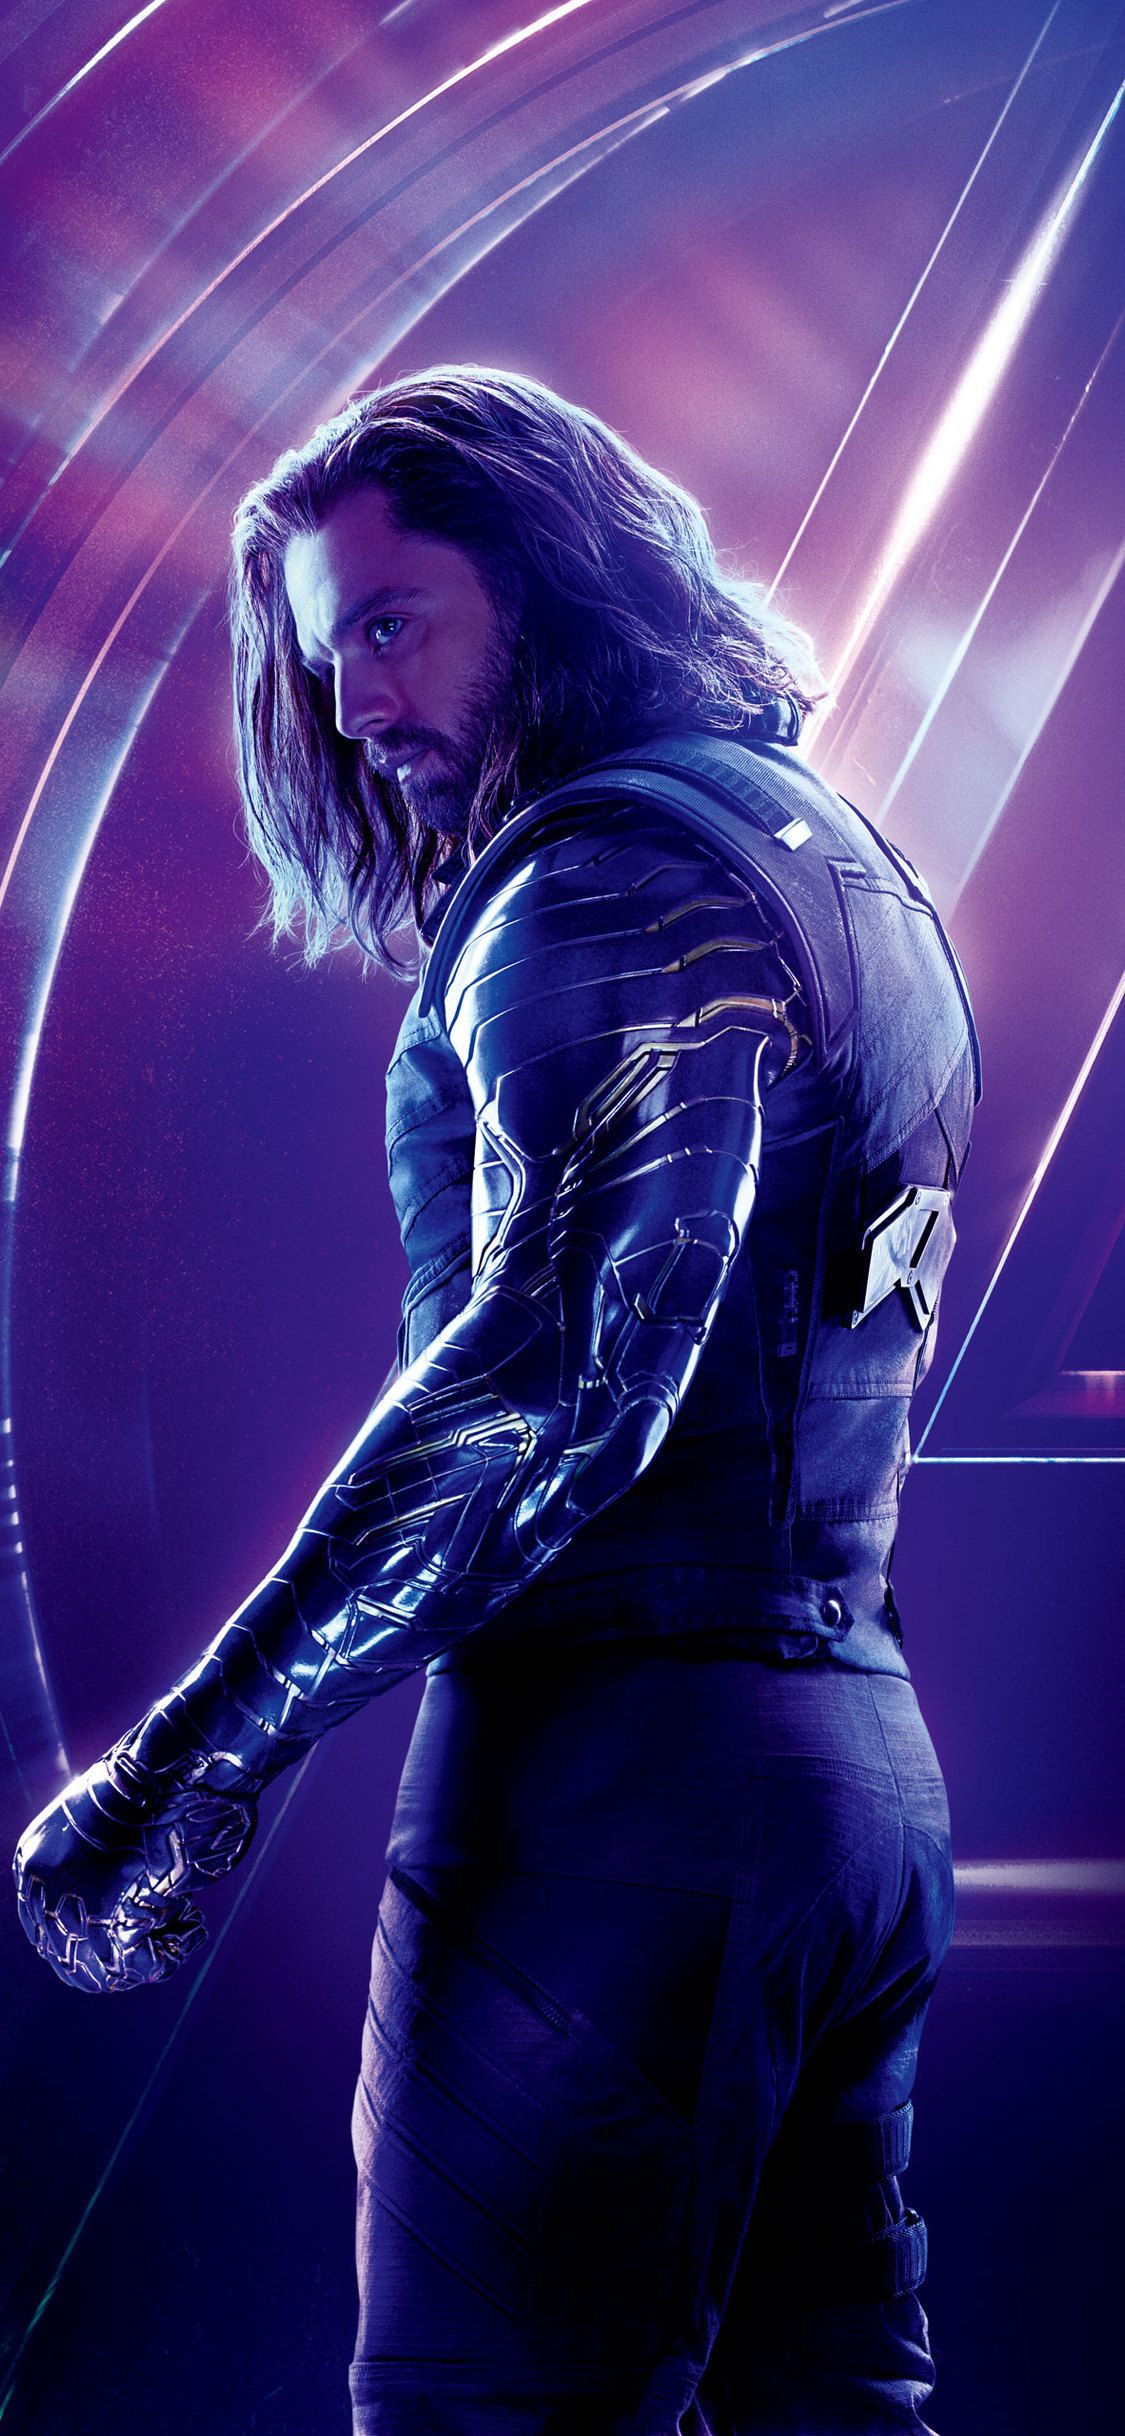 Bucky Barnes In Avengers Infinity War 8K Poster Wallpapers